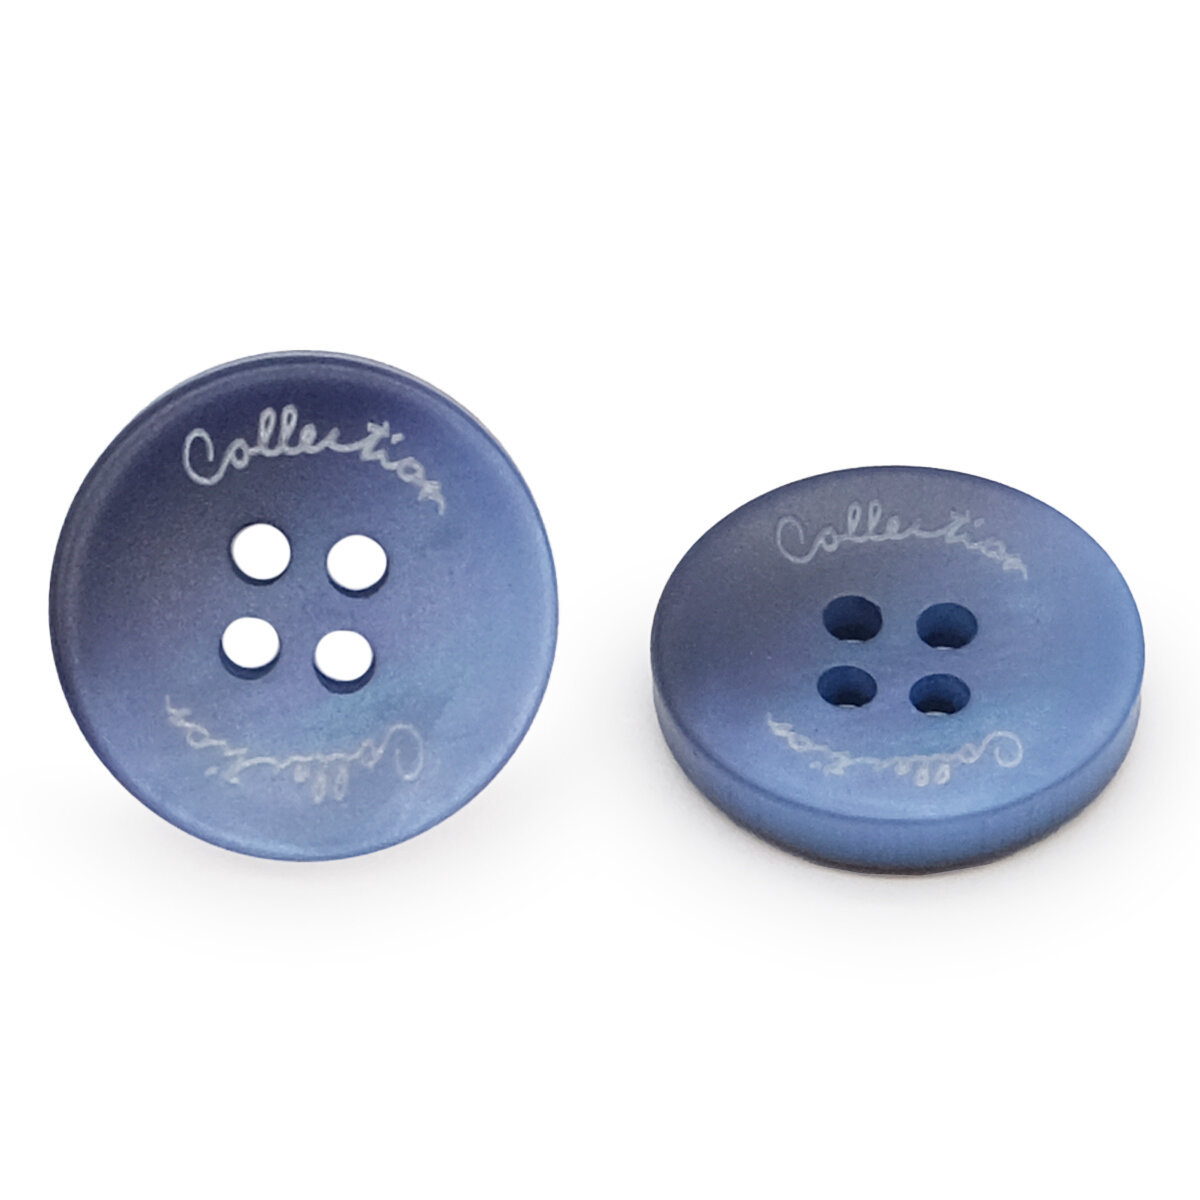 CB 3643 Пуговица 'Collection' 24L (15 мм), 4 прокола, пластик (синий), 36 шт